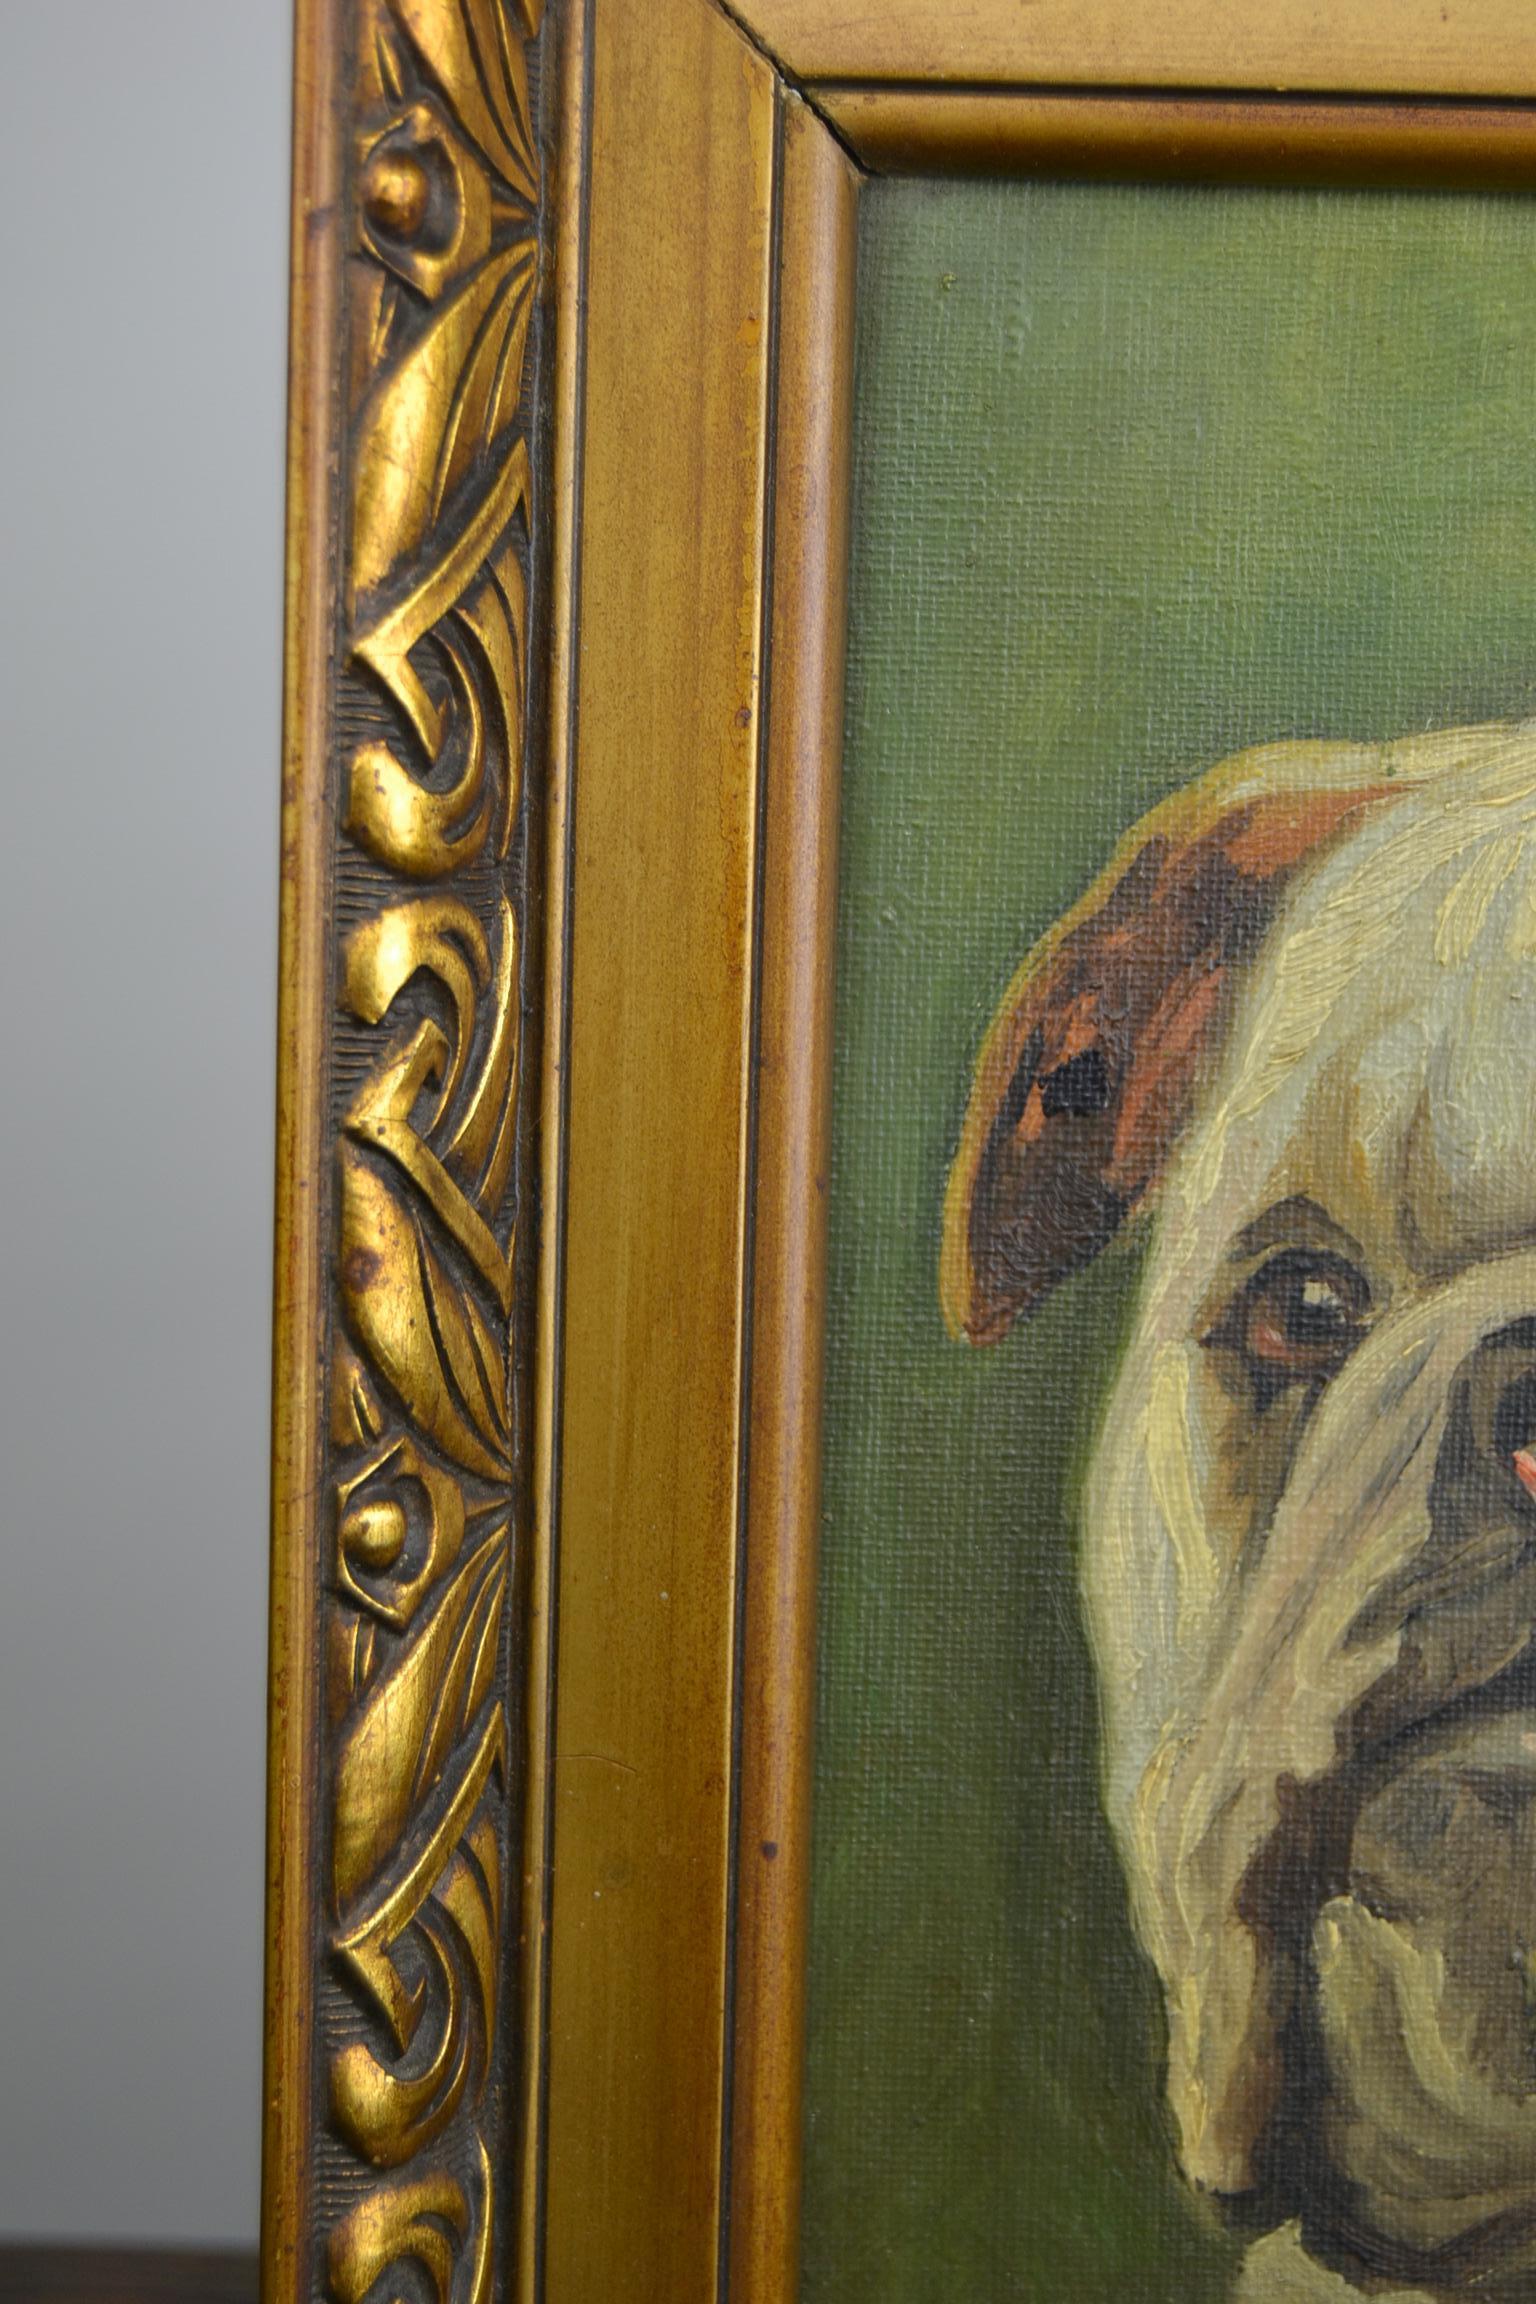 European Framed English Bulldog Painting on Canvas, 1930s